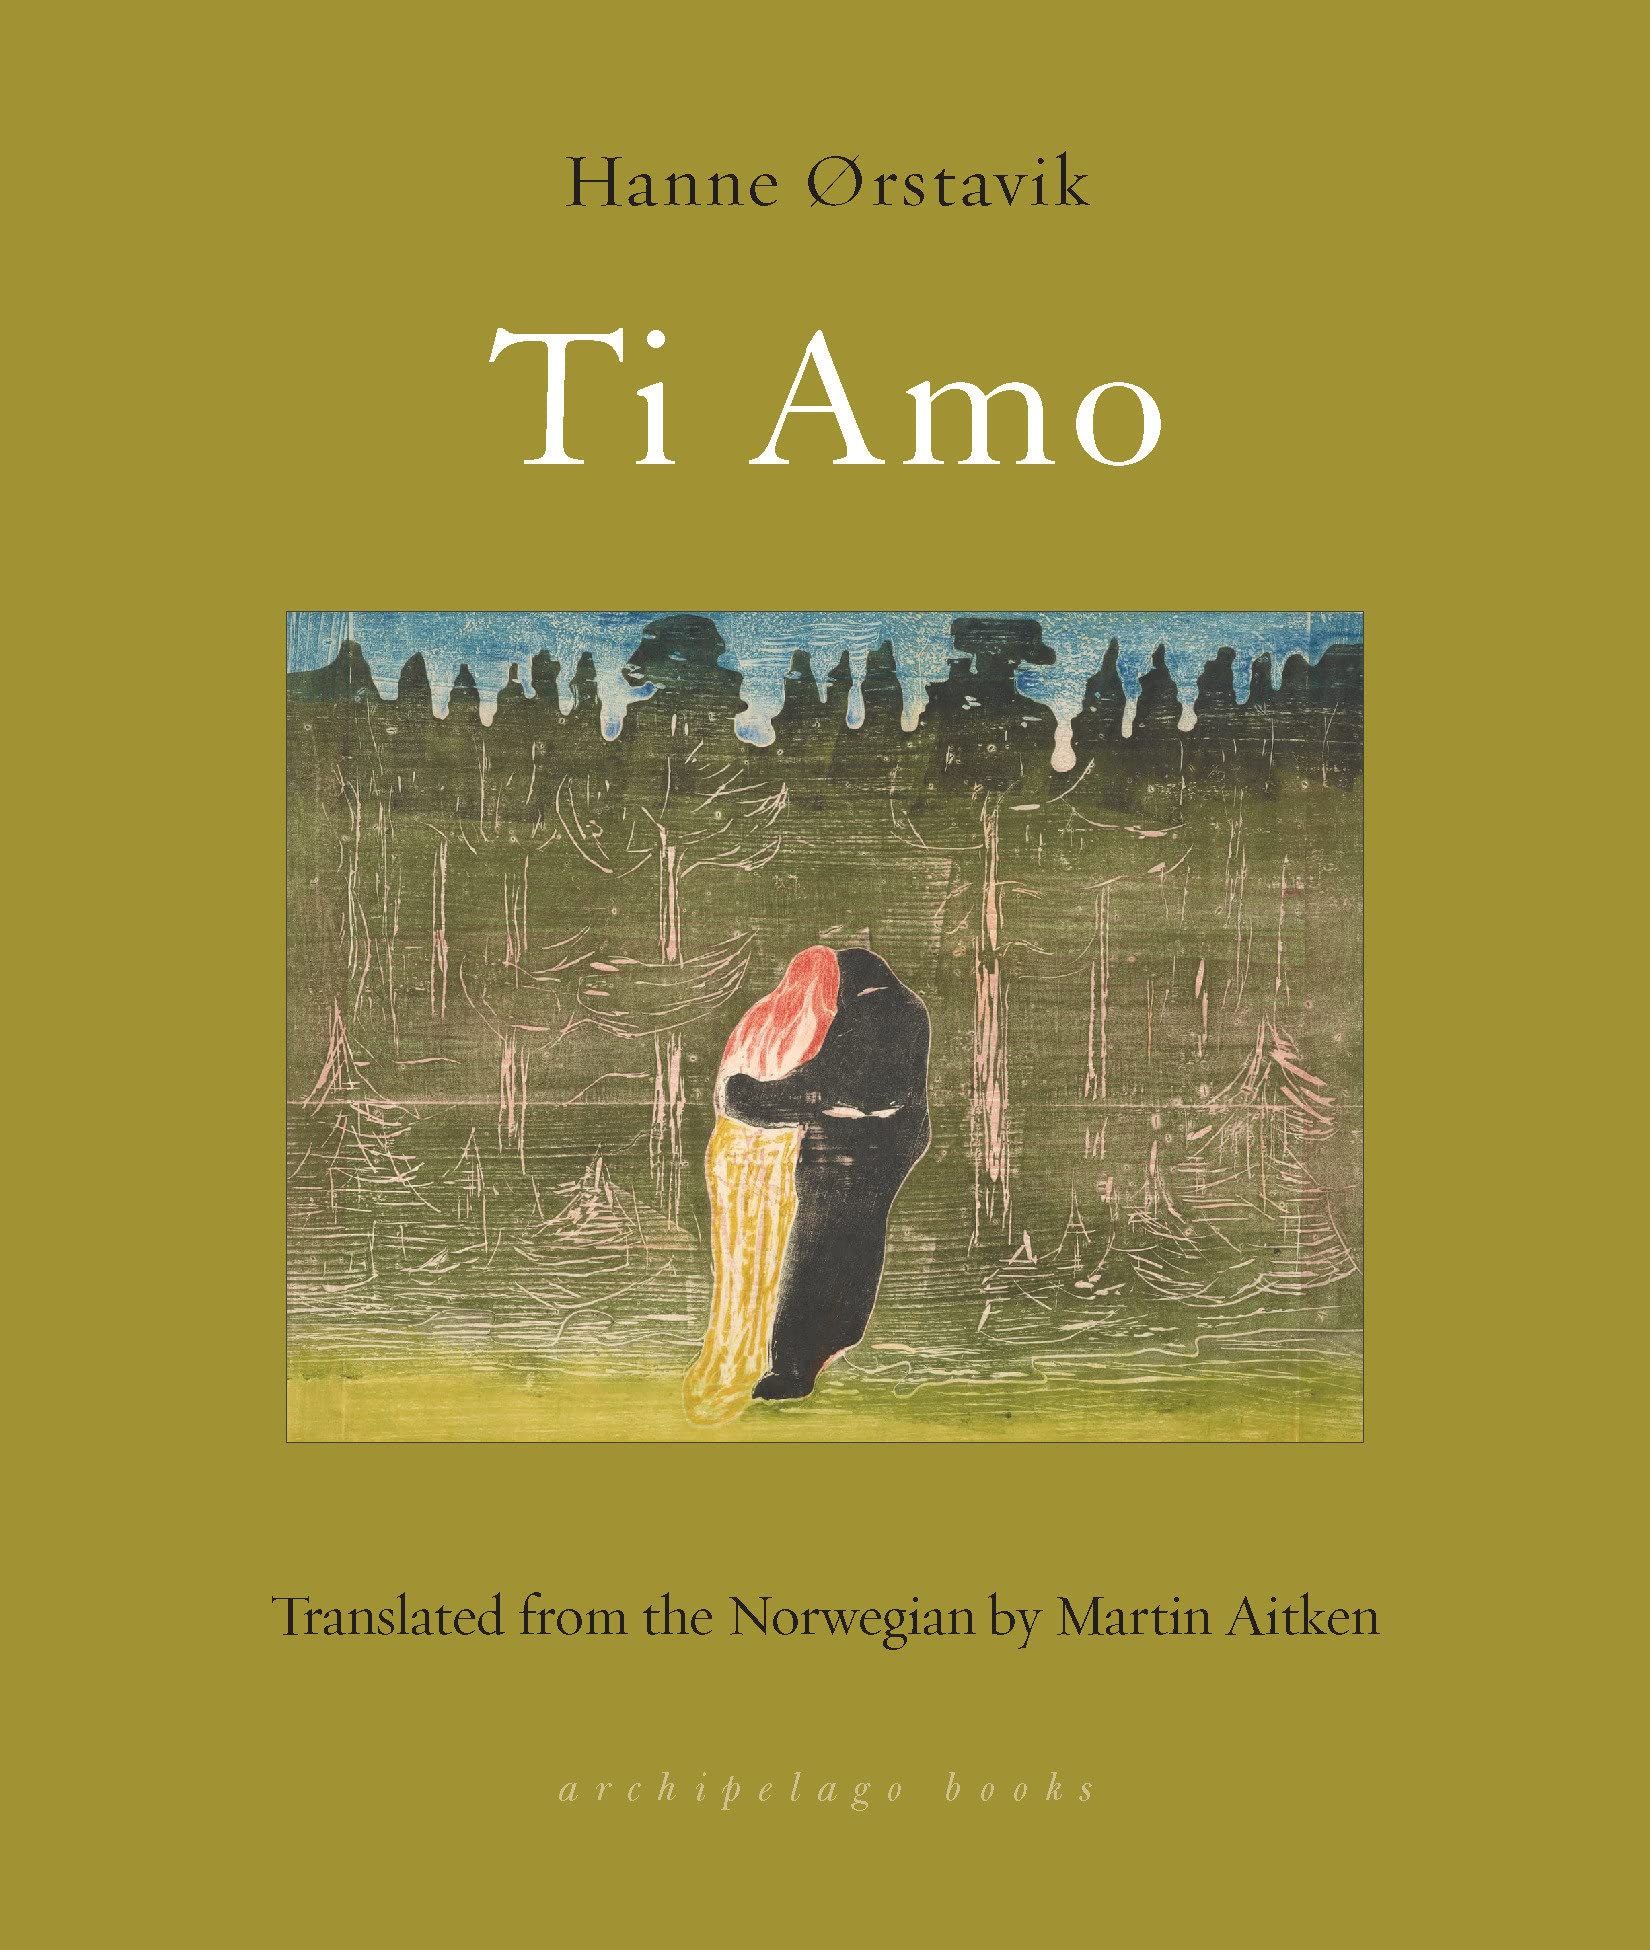 Hanne Orstavik, tr. Martin Aitken, Ti Amo